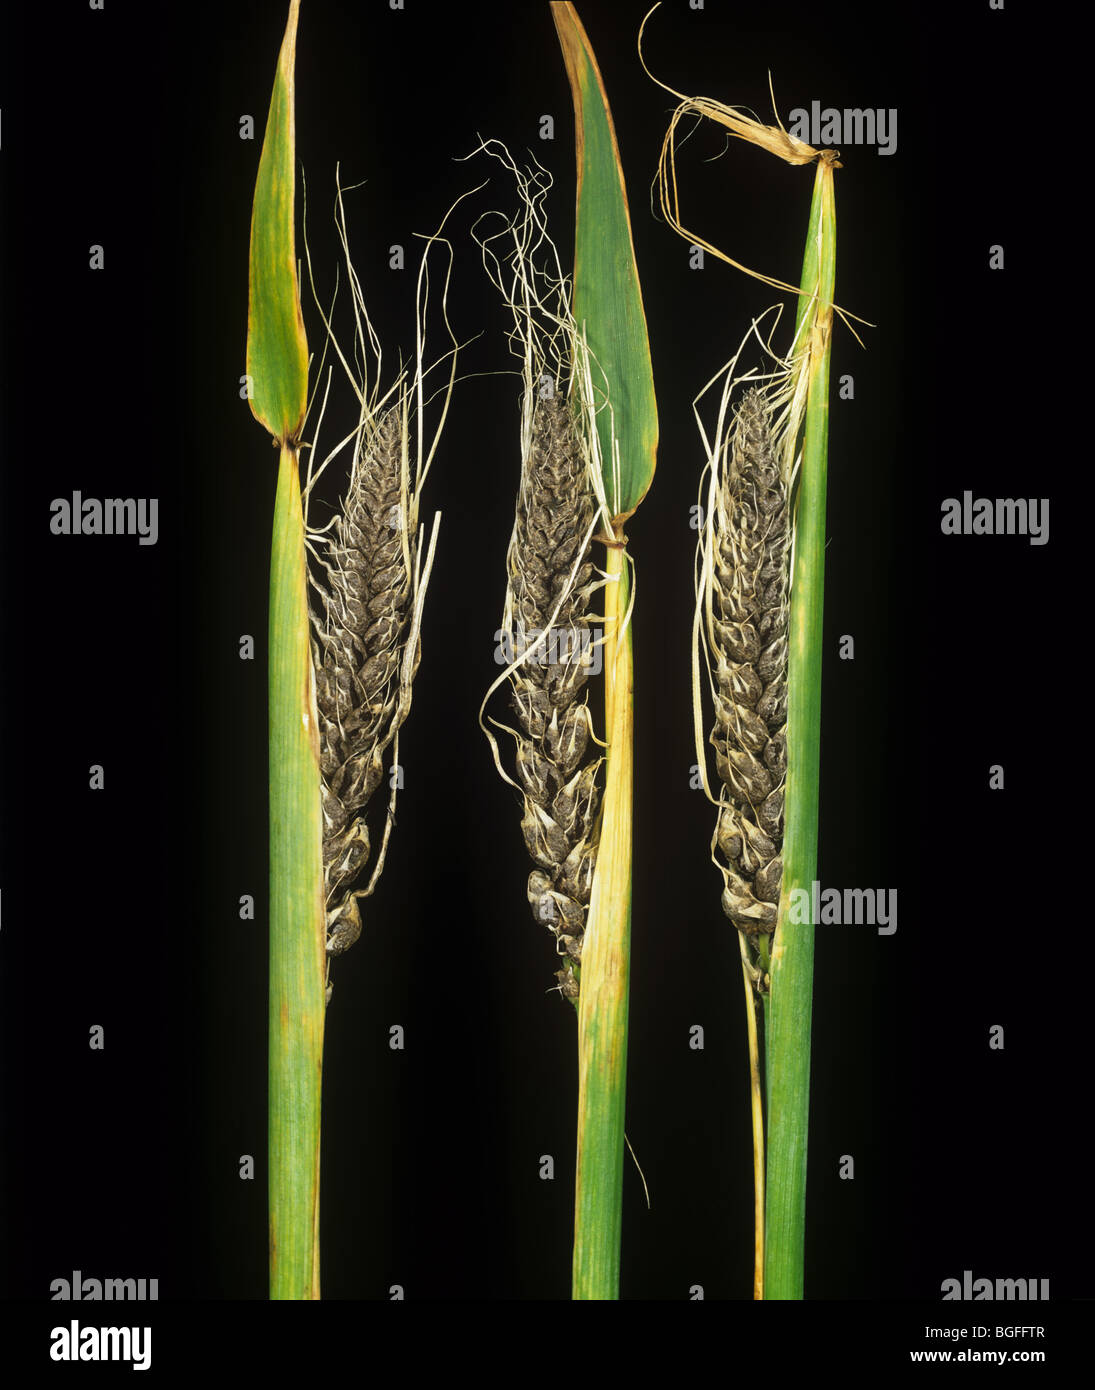 Covered smut (Ustilago segetum) smutted ears of barley Stock Photo